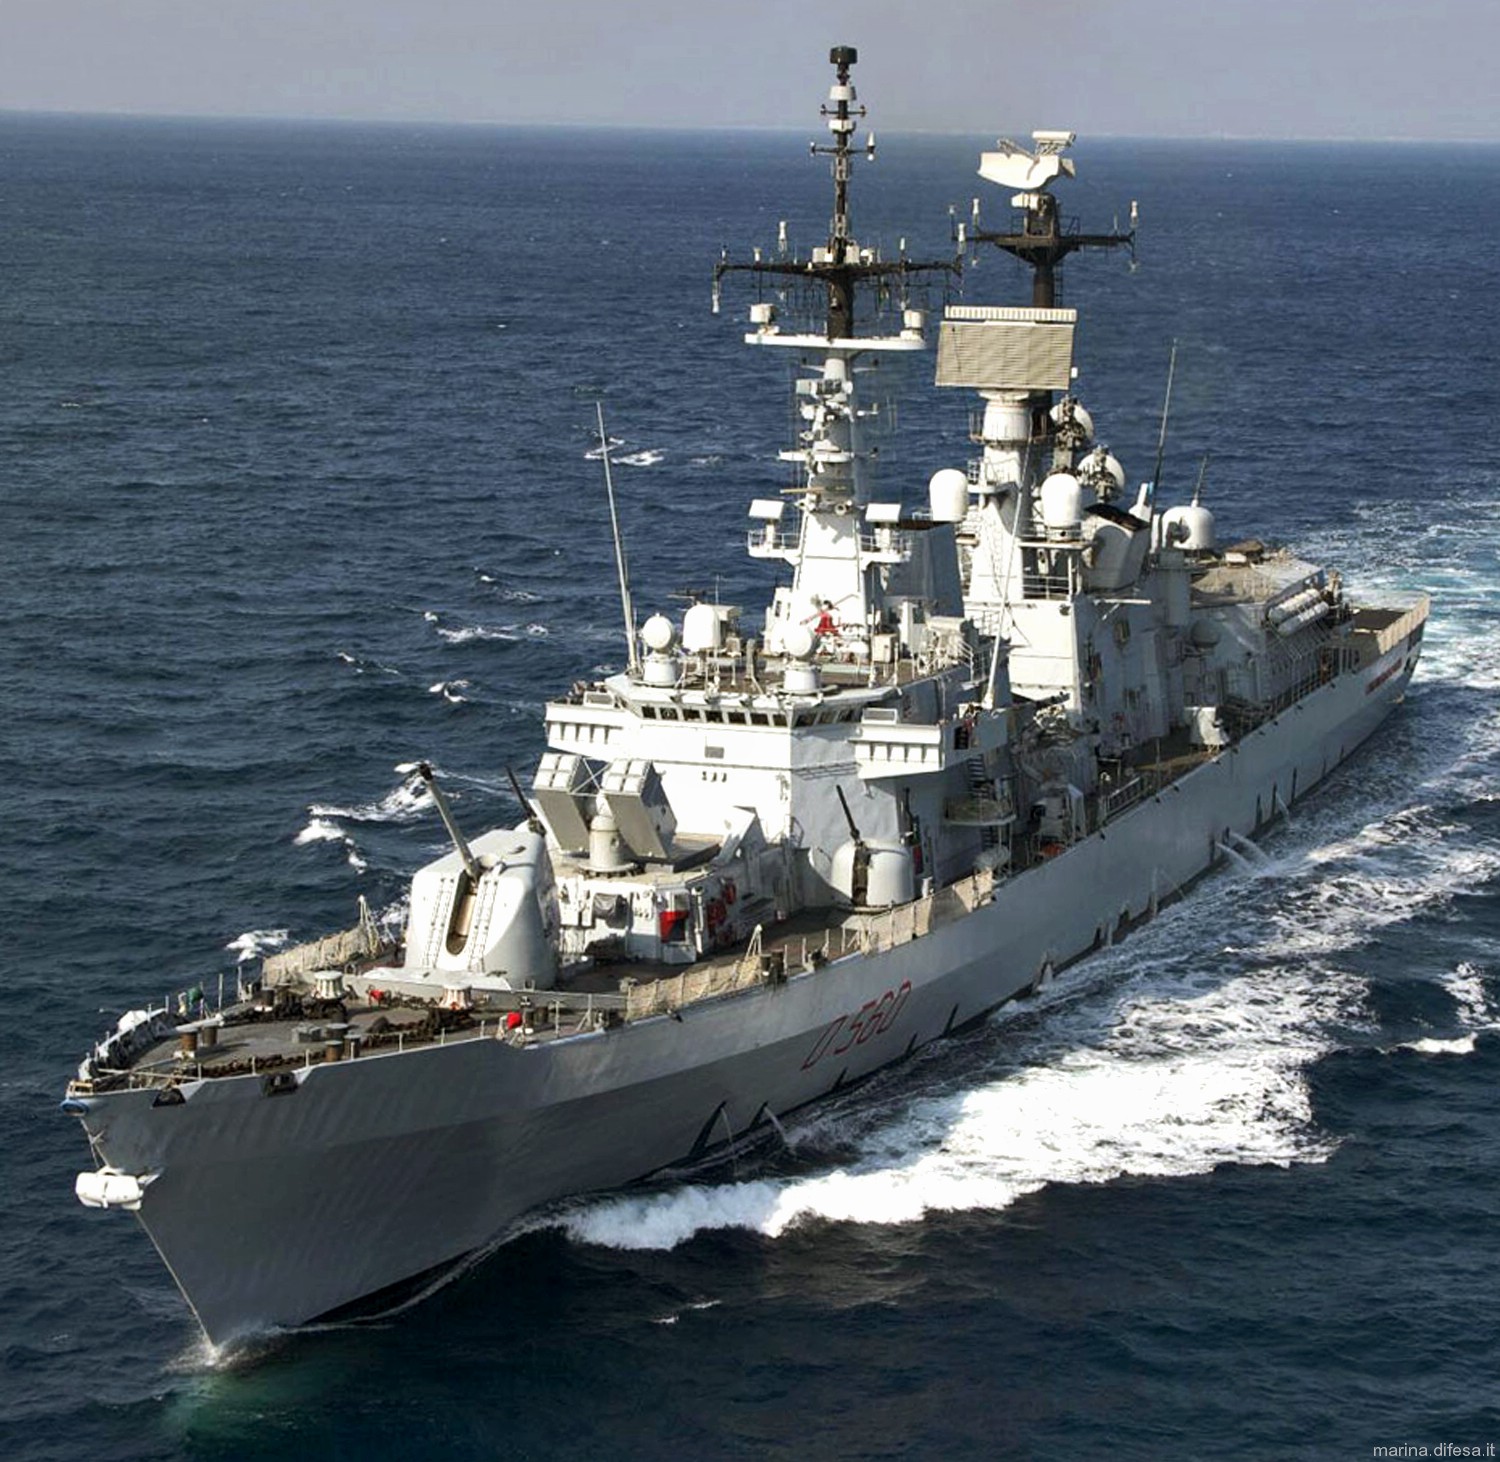 d-560 luigi durand de la penne its nave guided missile destroyer ddg italian navy marina militare 11